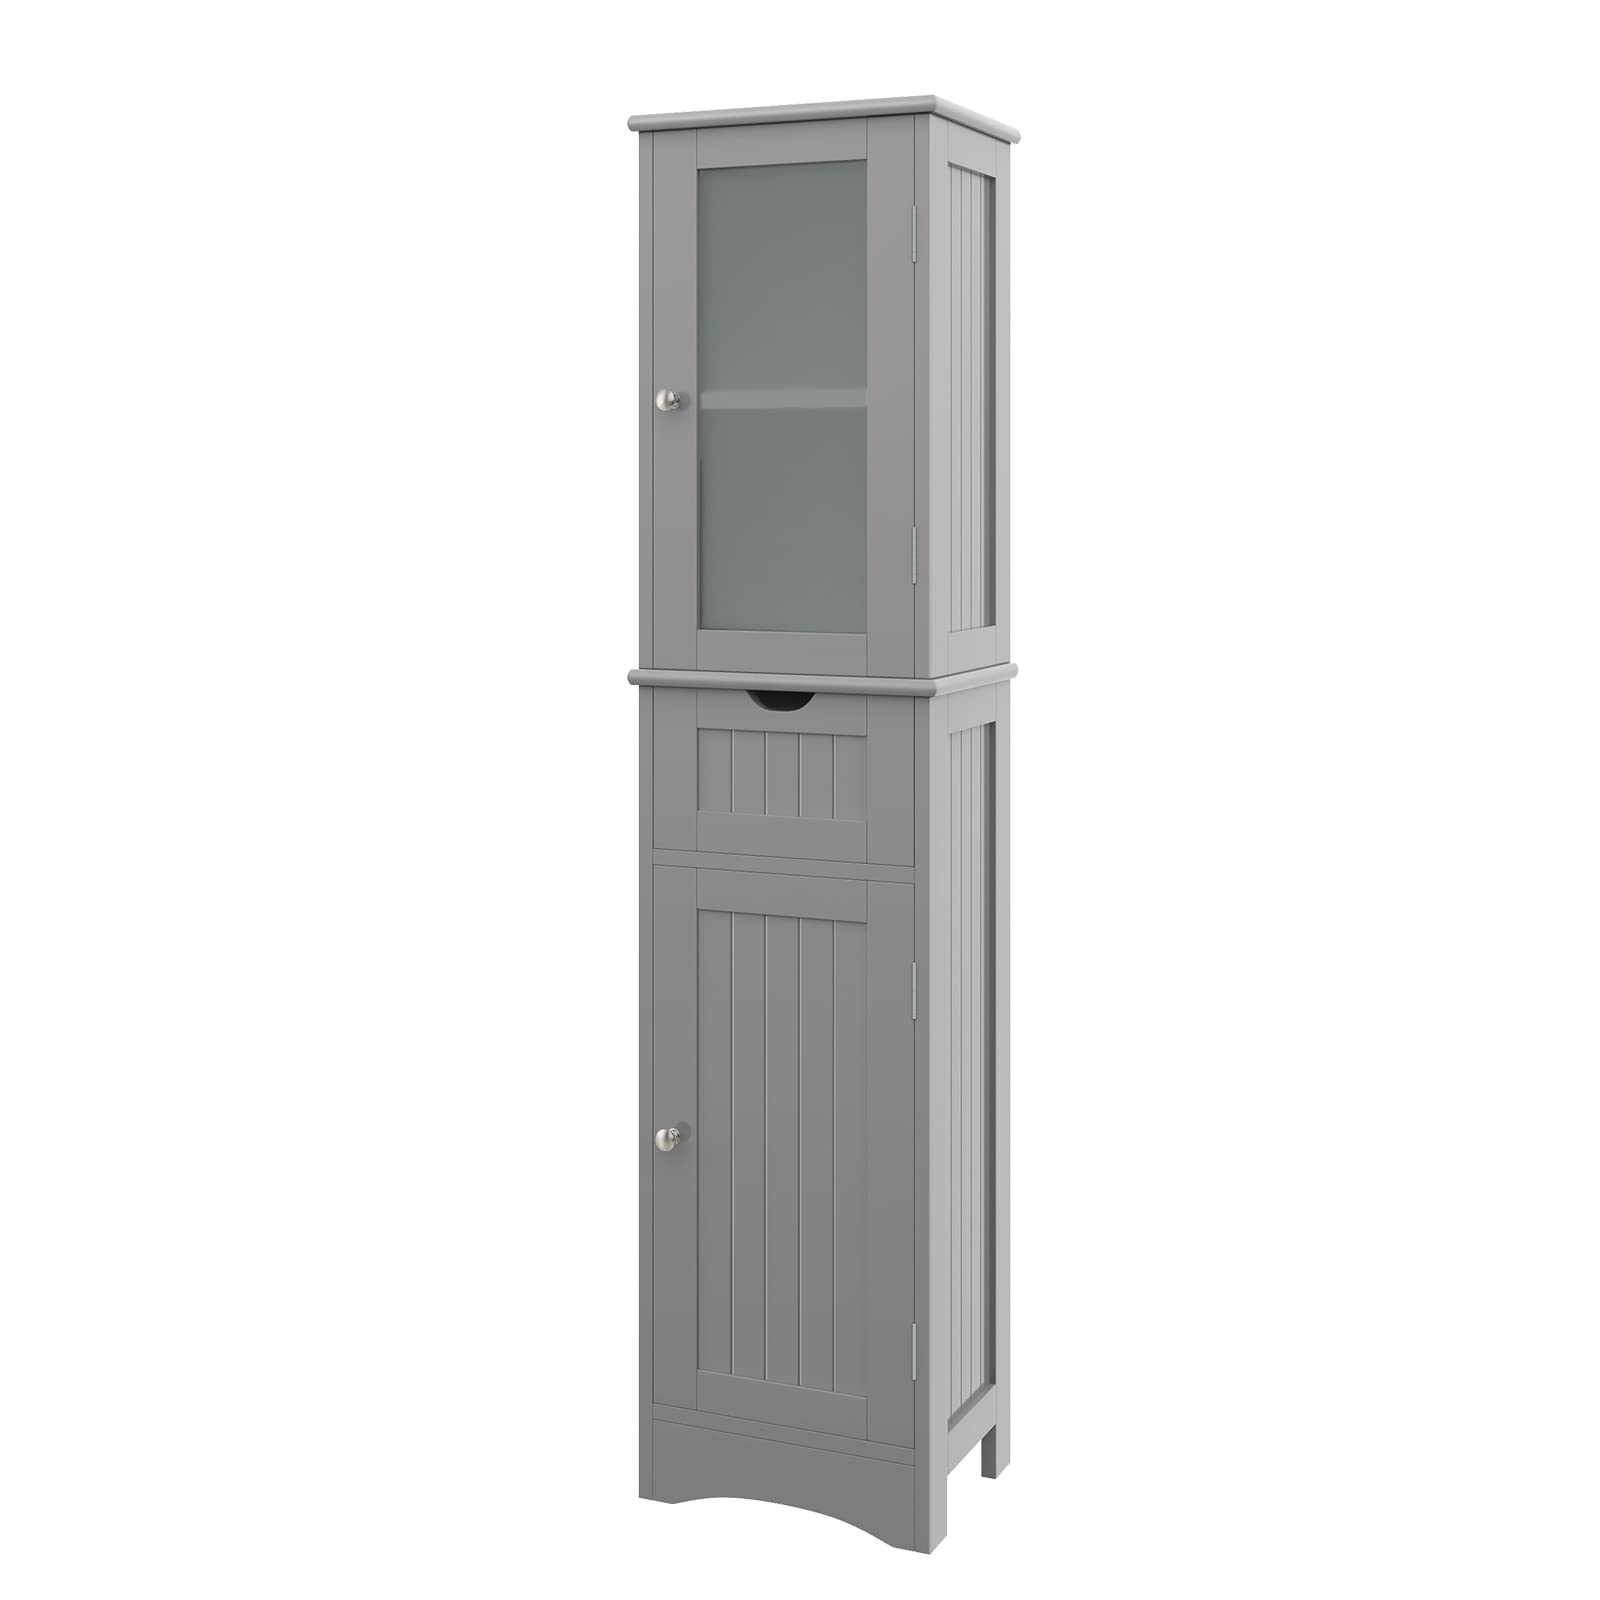 Giantex Freestanding Bathroom Storage Cabinet